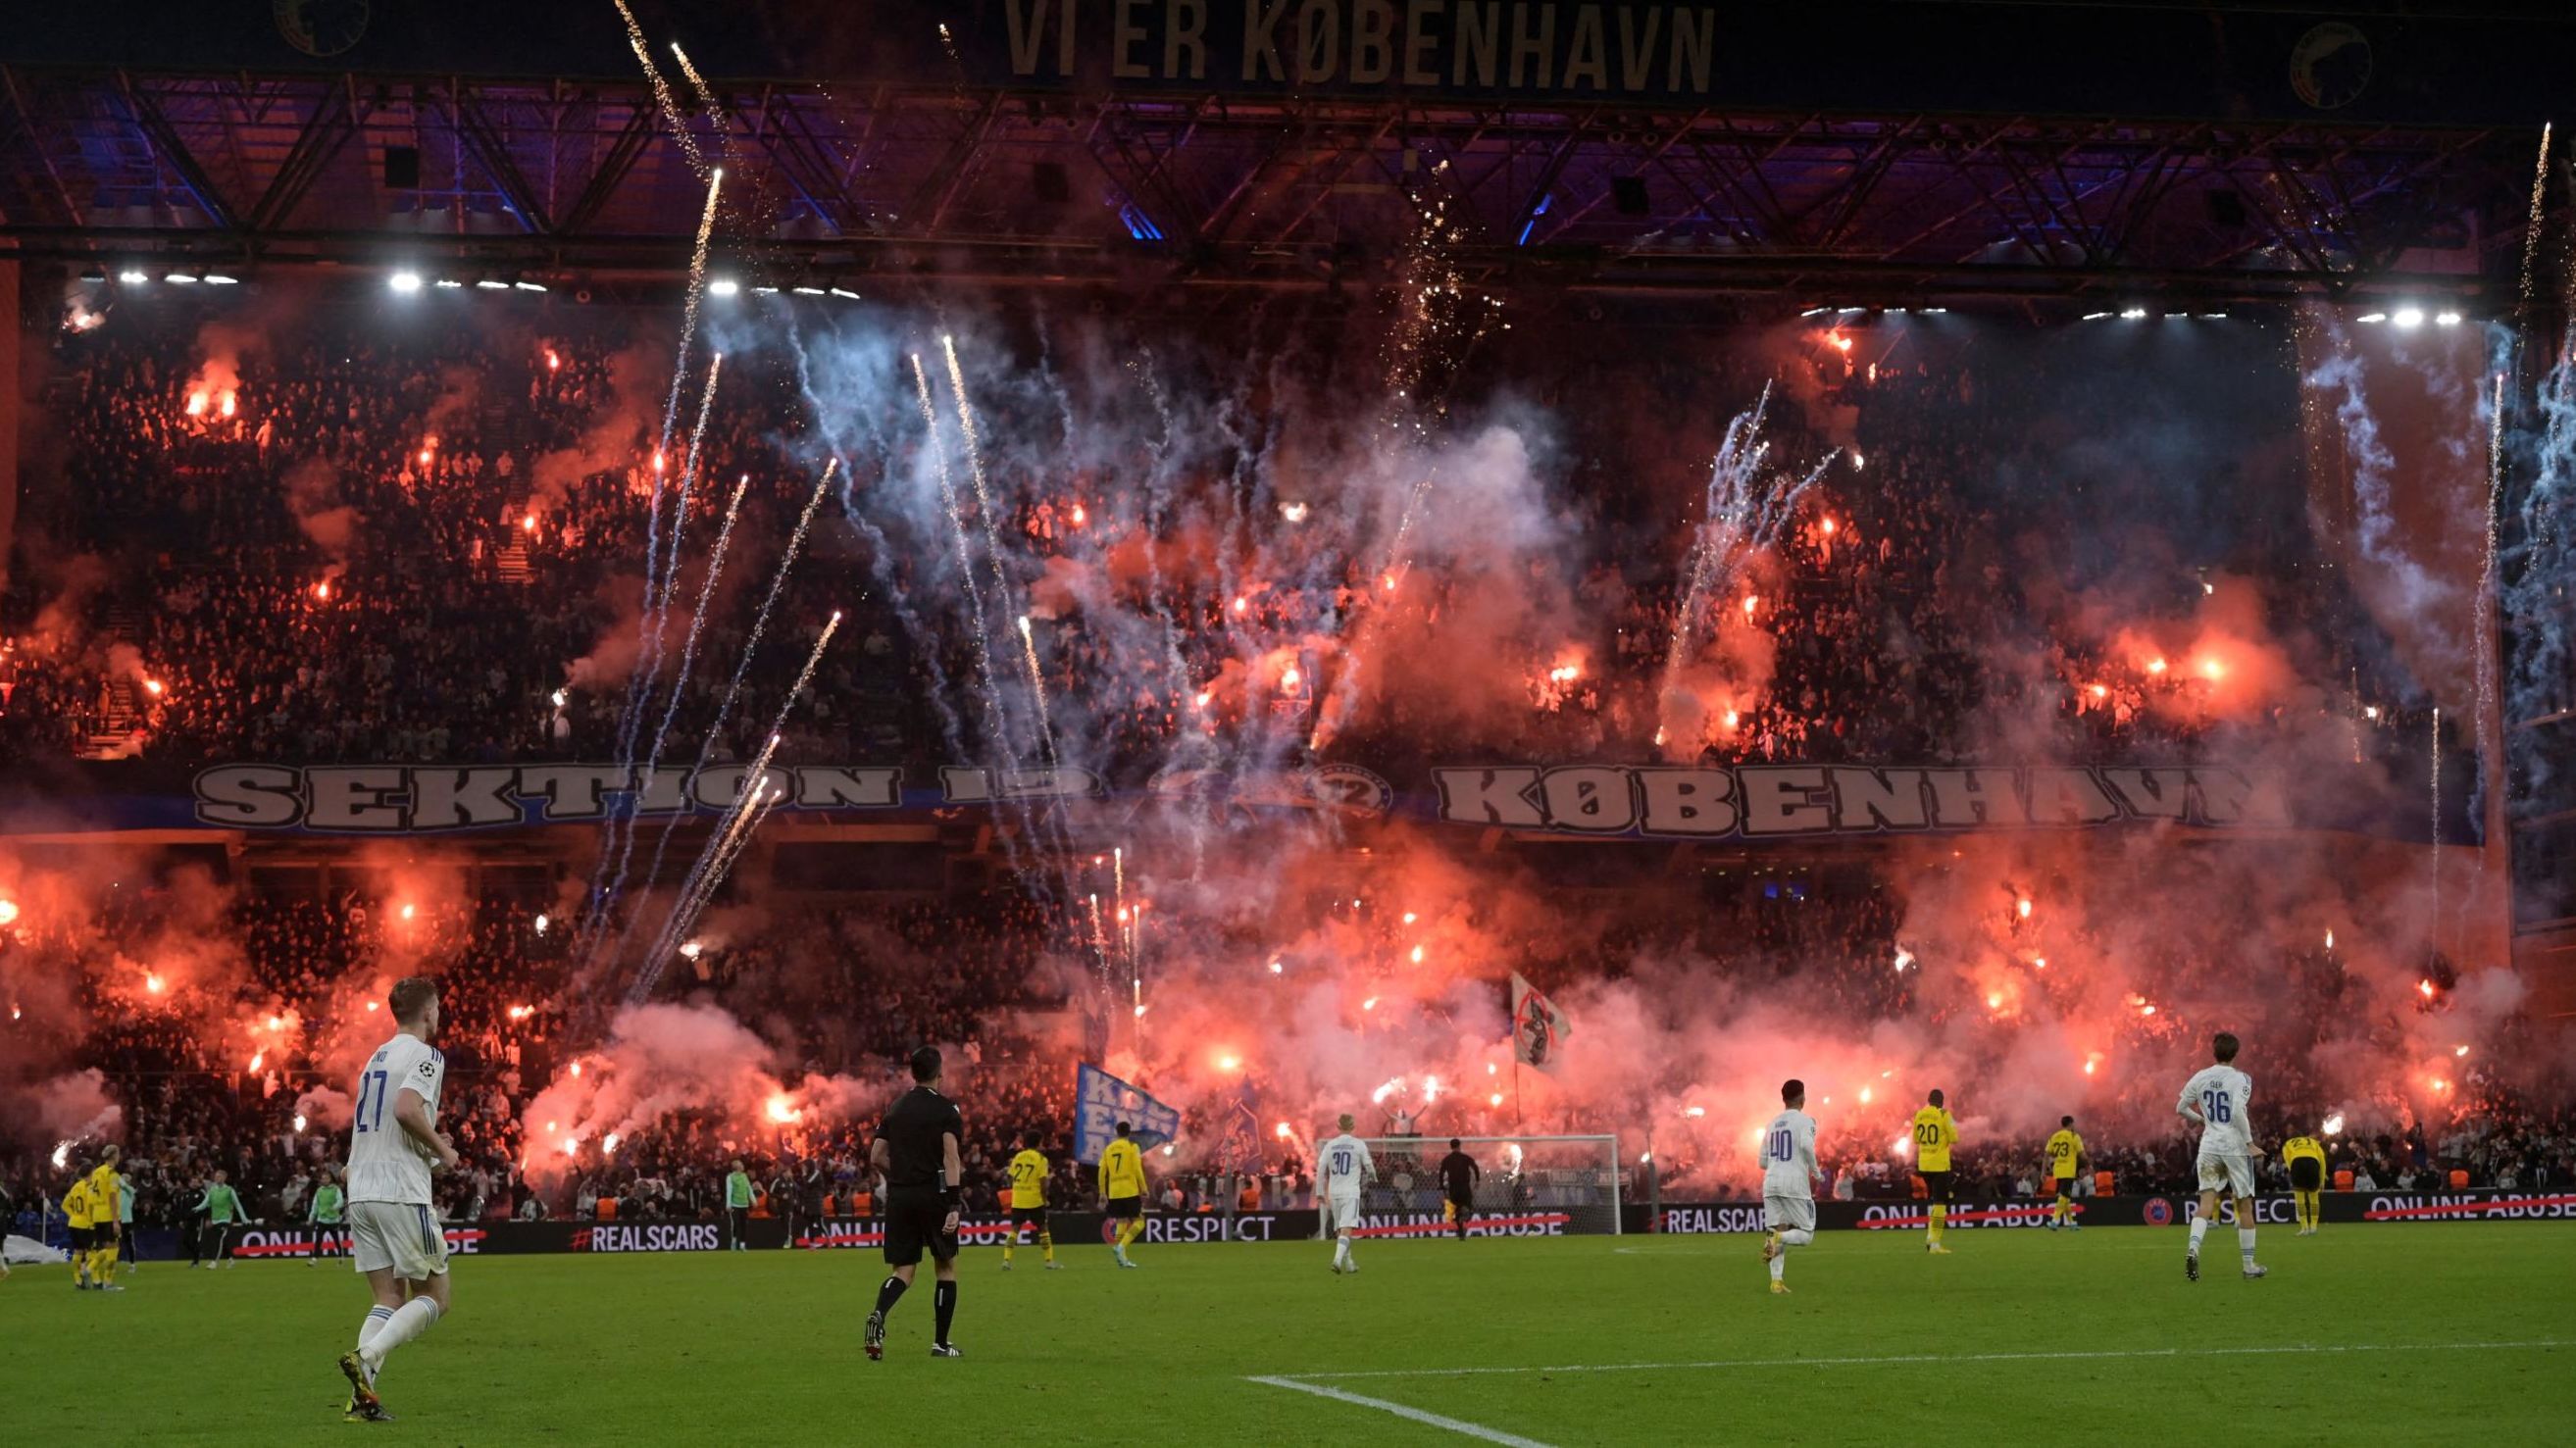 FC Copenhagen fans let off flares in the stands during a match against Borussia Dortmund in Copenhagen, Denmark, on Wednesday, November 2.